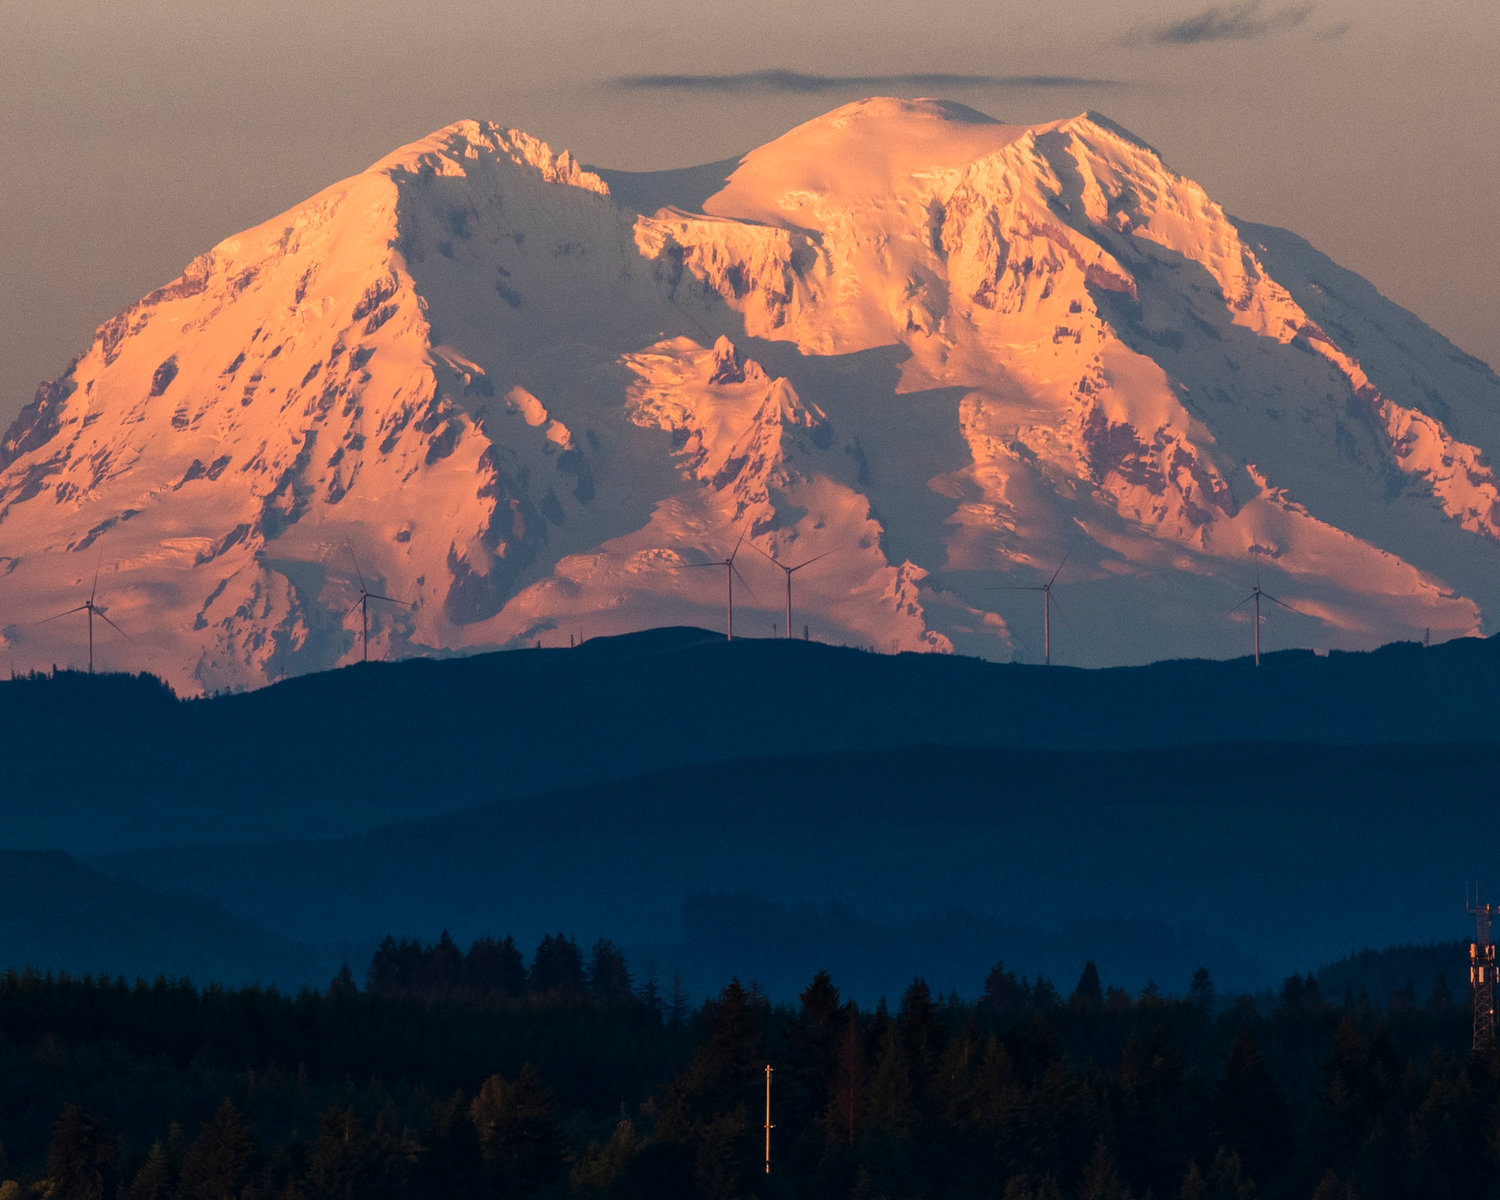 Mount Rainier reflects light at sunset un this file photo.